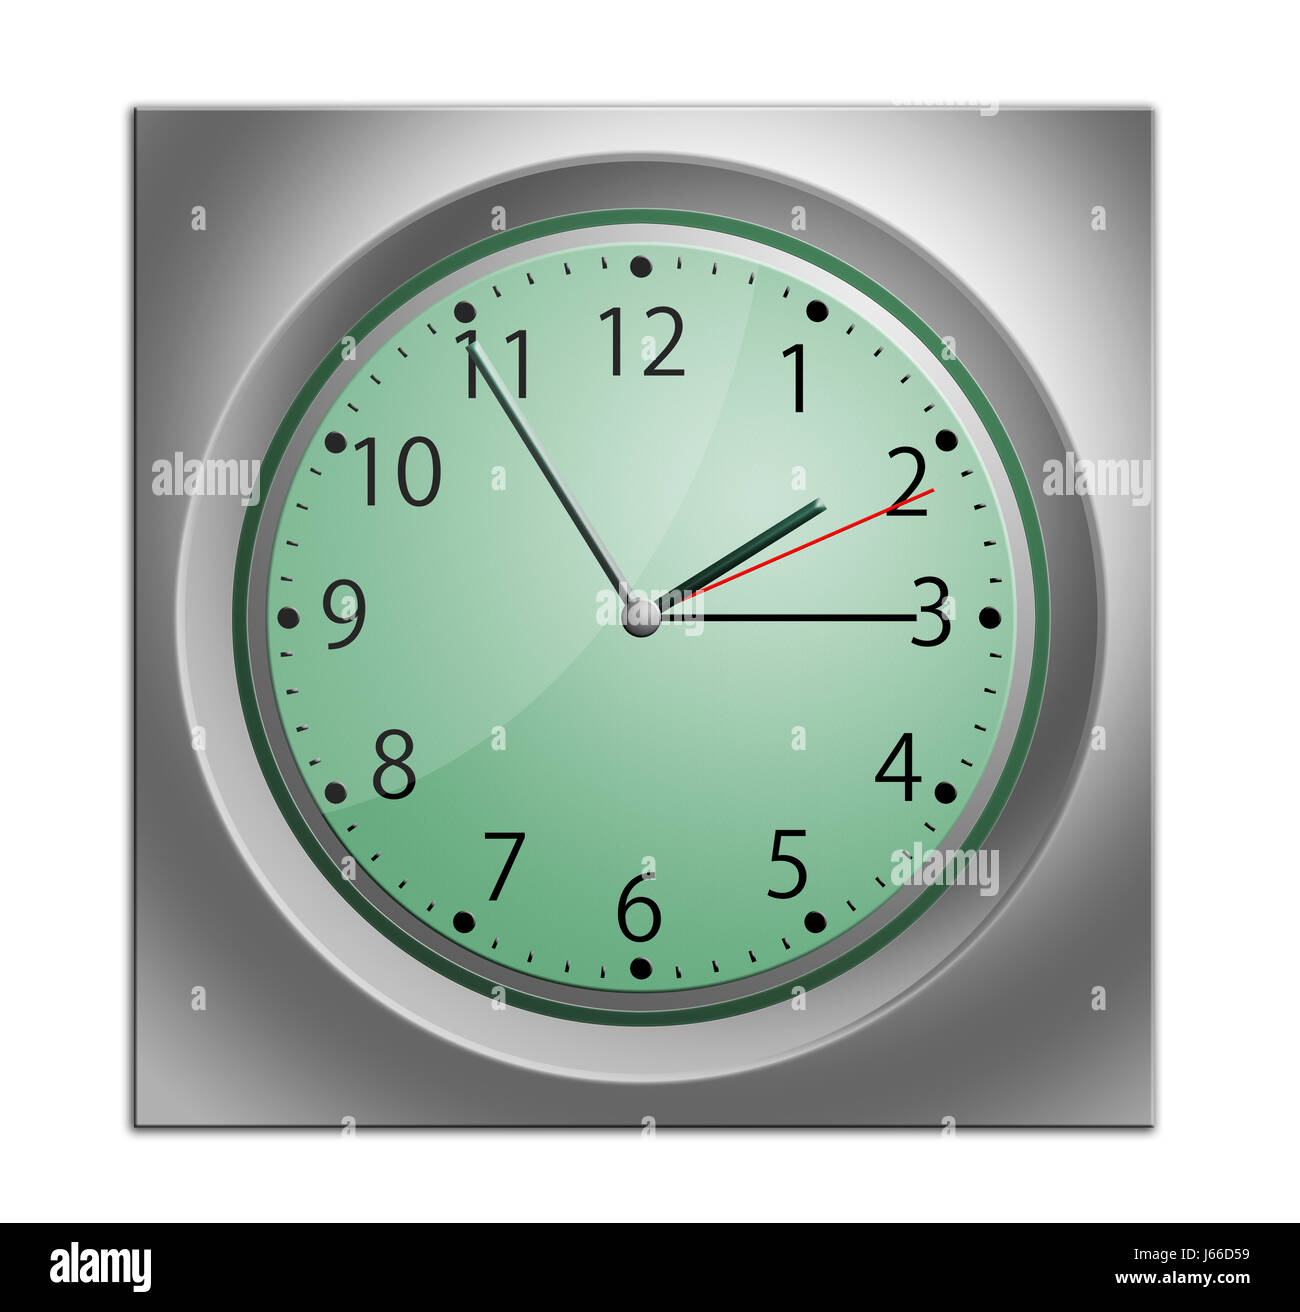 Reloj de pared reloj cronómetro reloj oficina puntero hora minutos segundos  Fotografía de stock - Alamy